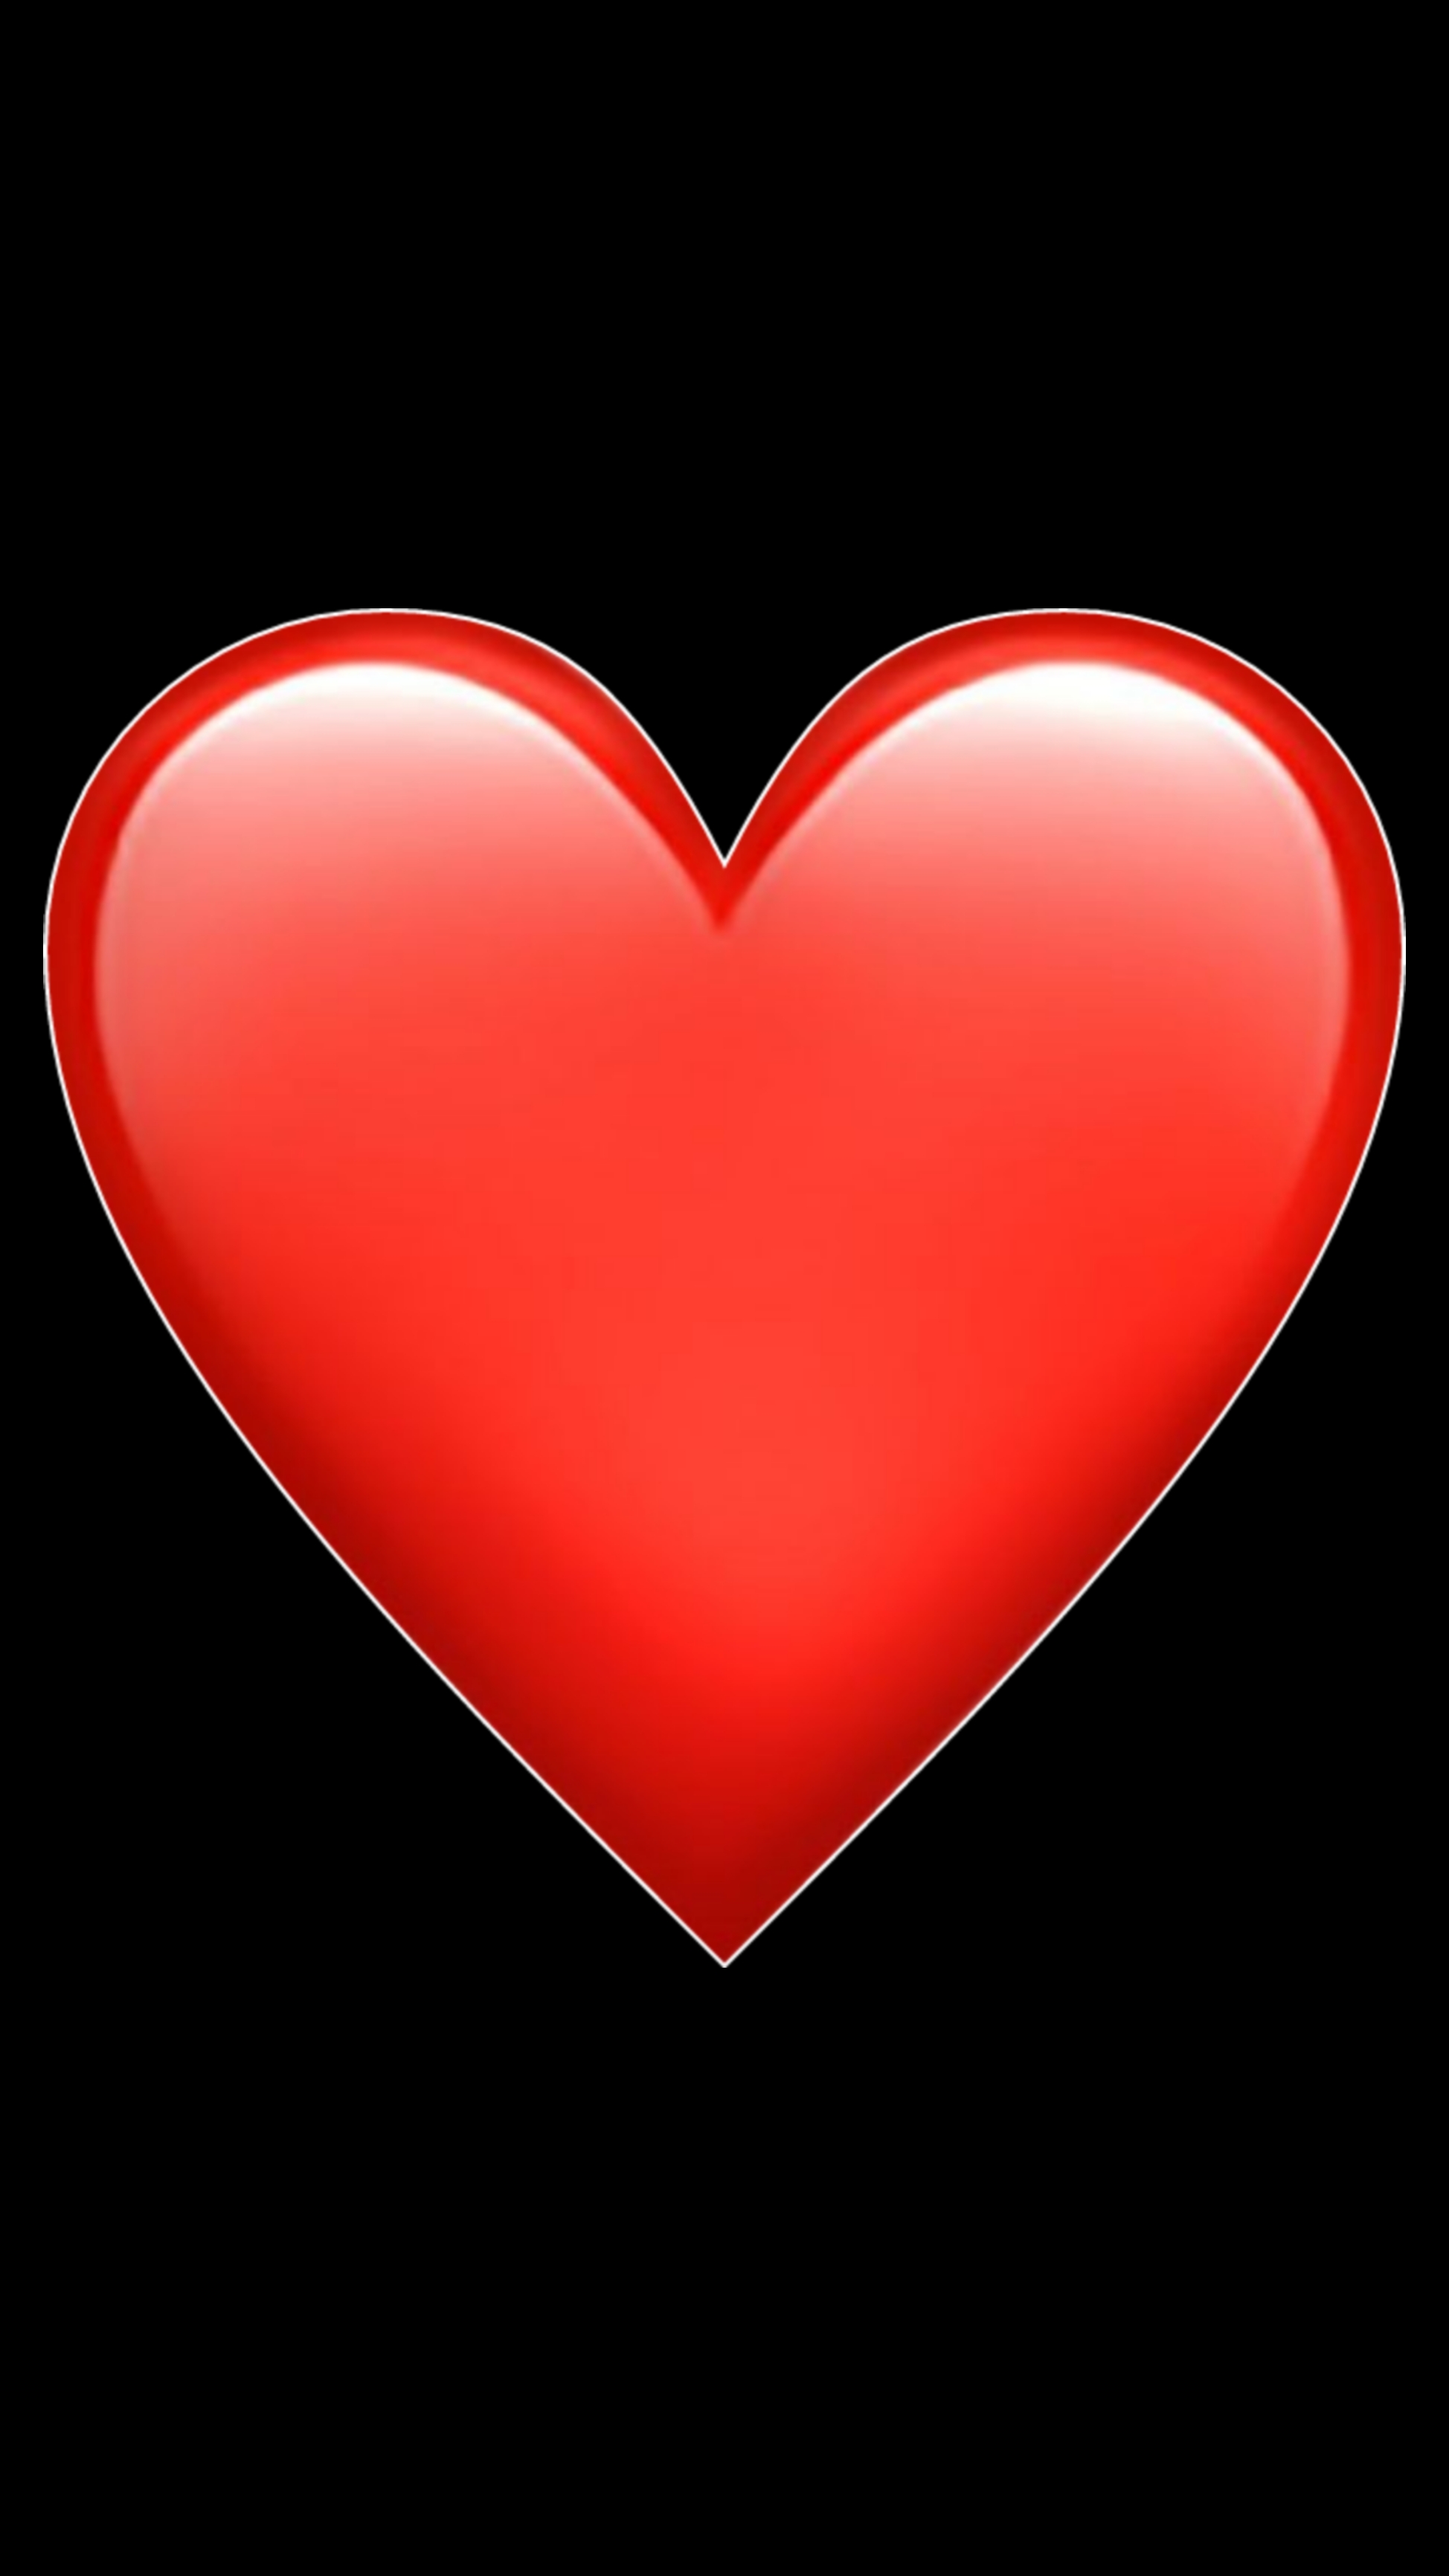 दिल वॉलपेपर मोबाइल | Heart mobile wallpaper hd